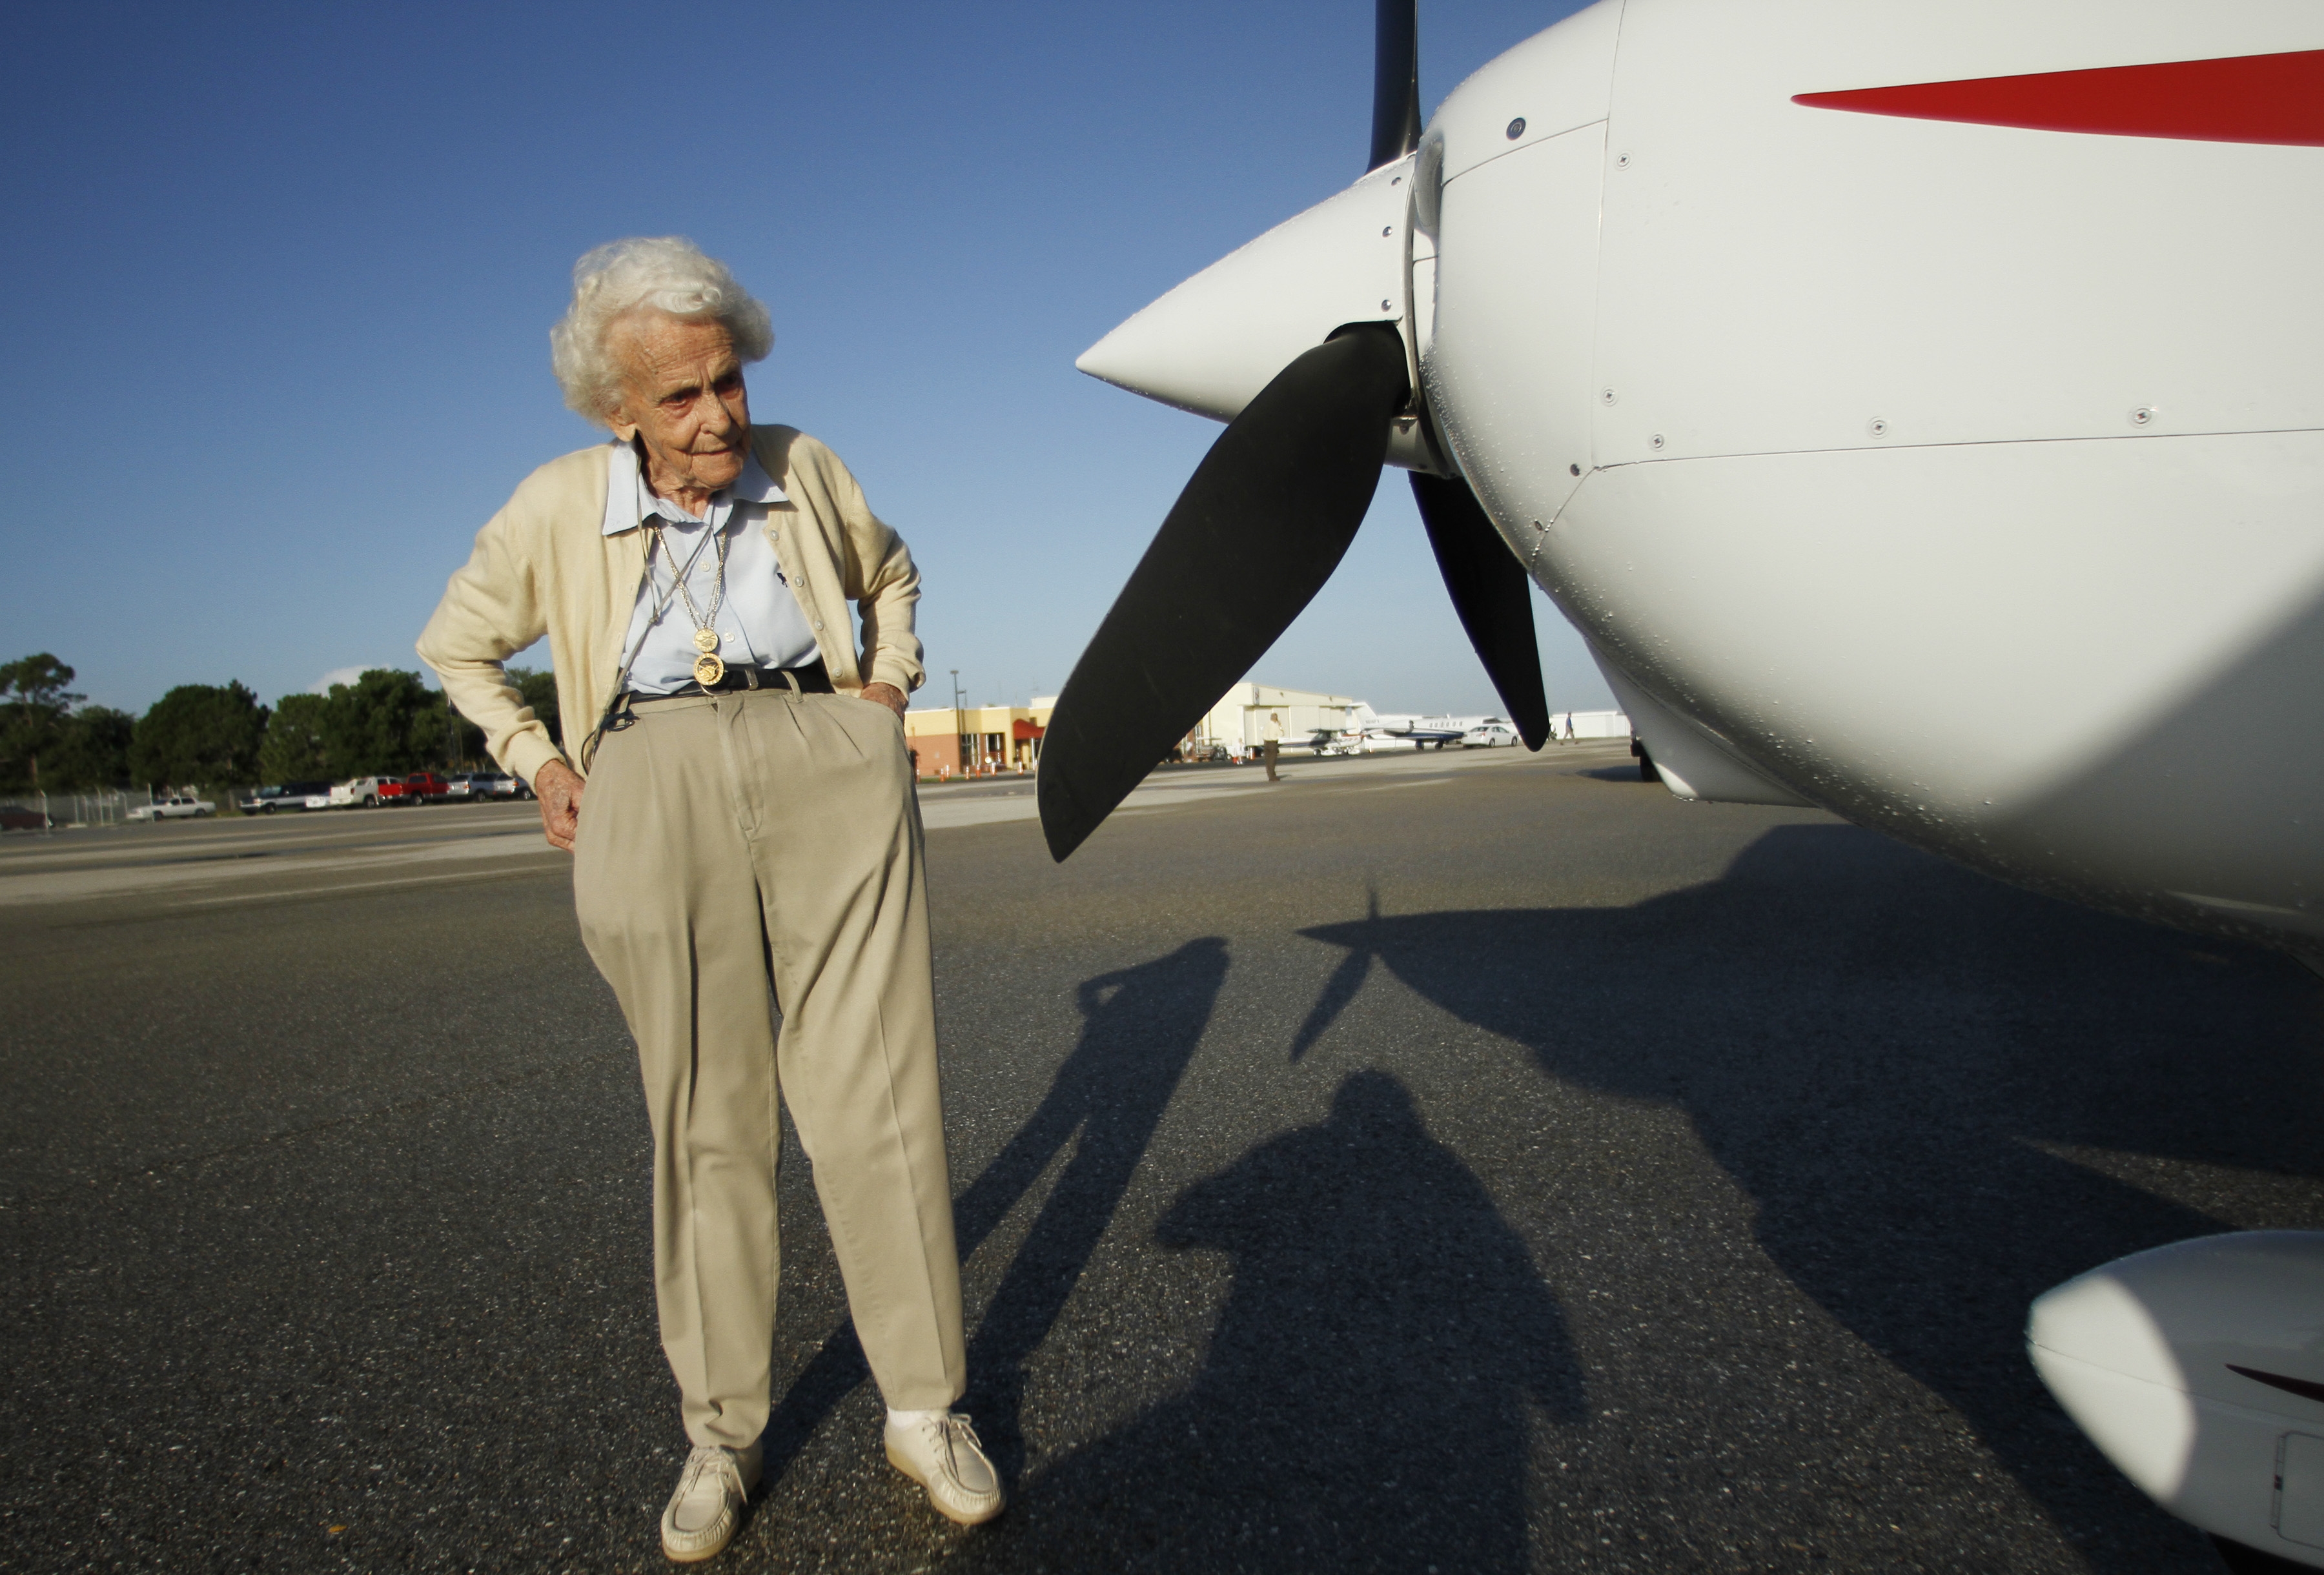 Wanted: A few more women aviators